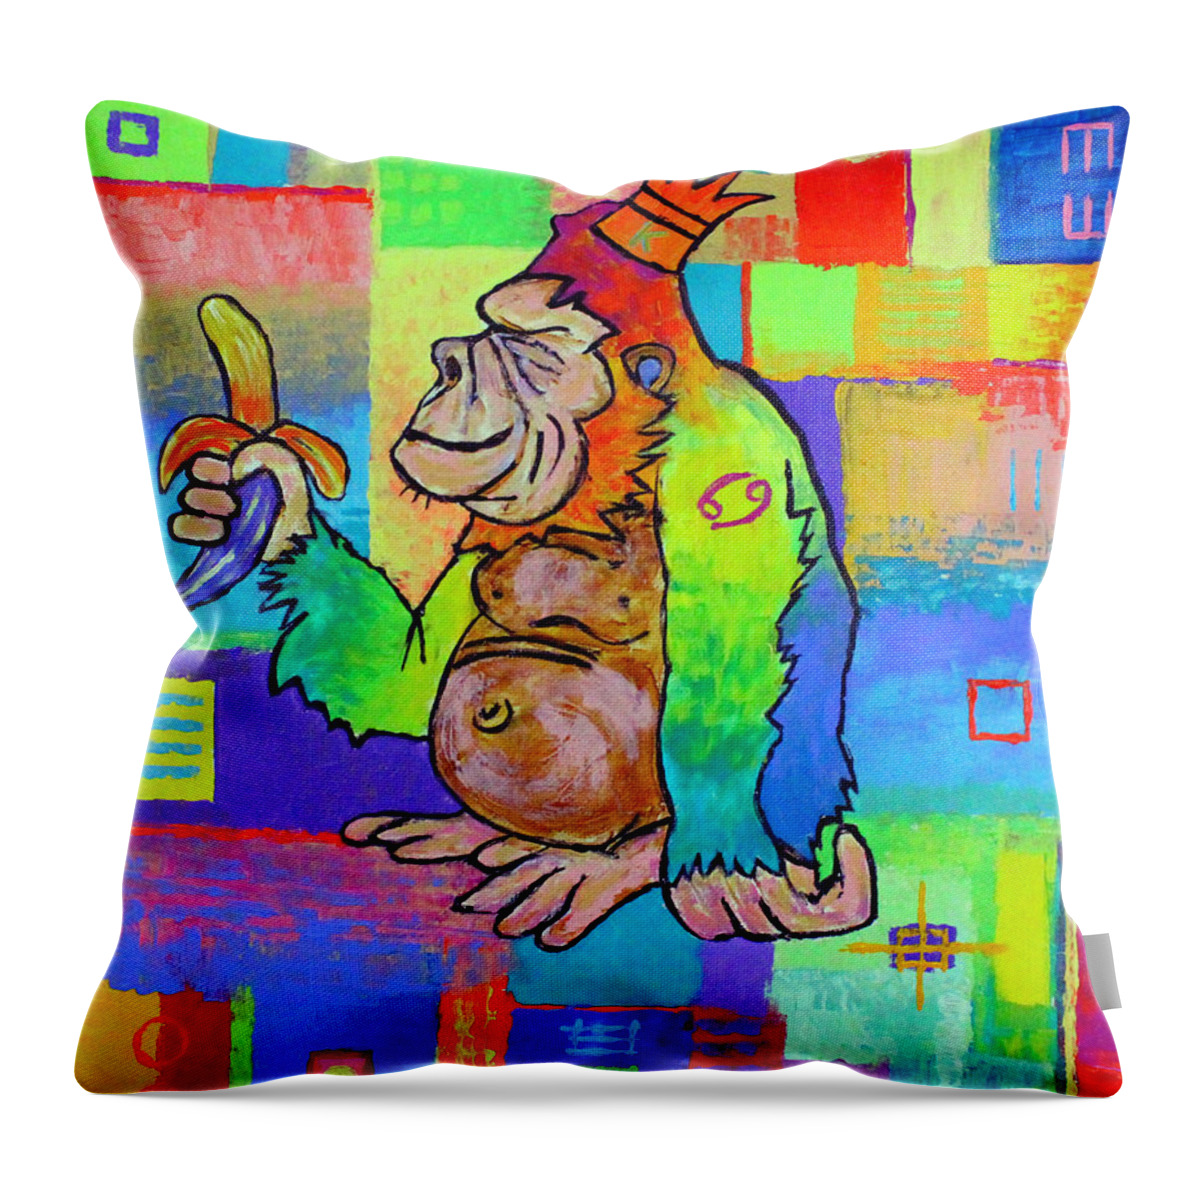 Konrad Throw Pillow featuring the painting King Konrad The Monkey by Jeremy Aiyadurai